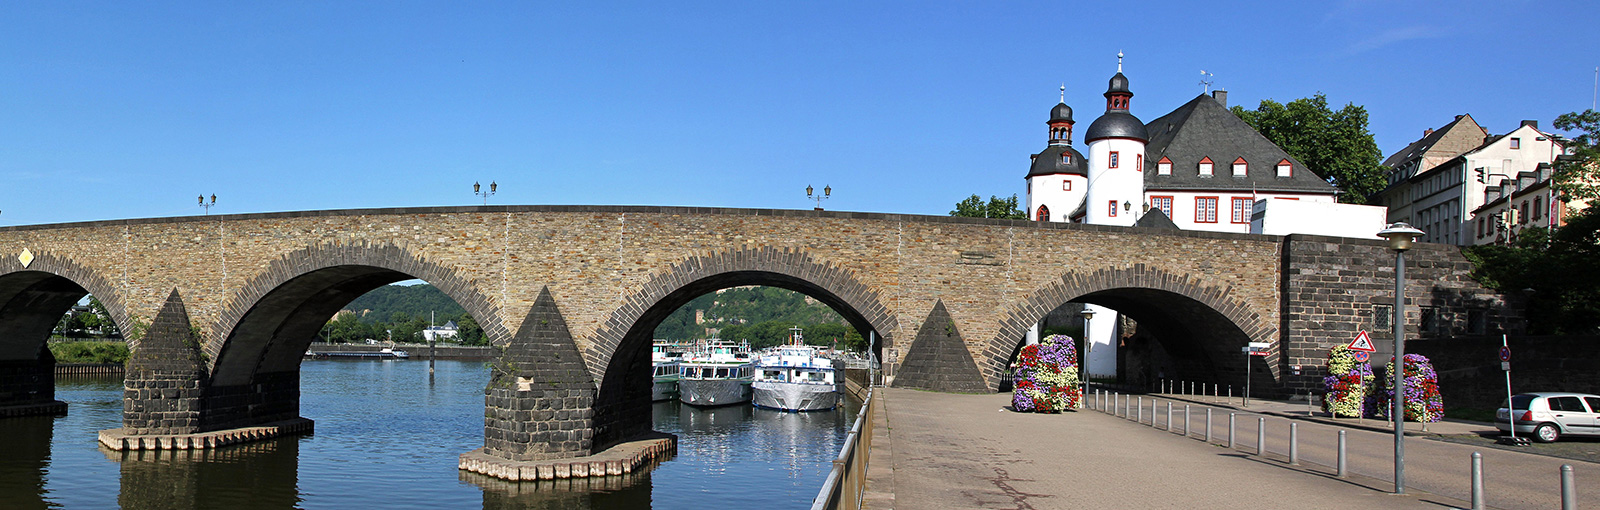 Balduinbrücke in Koblenz